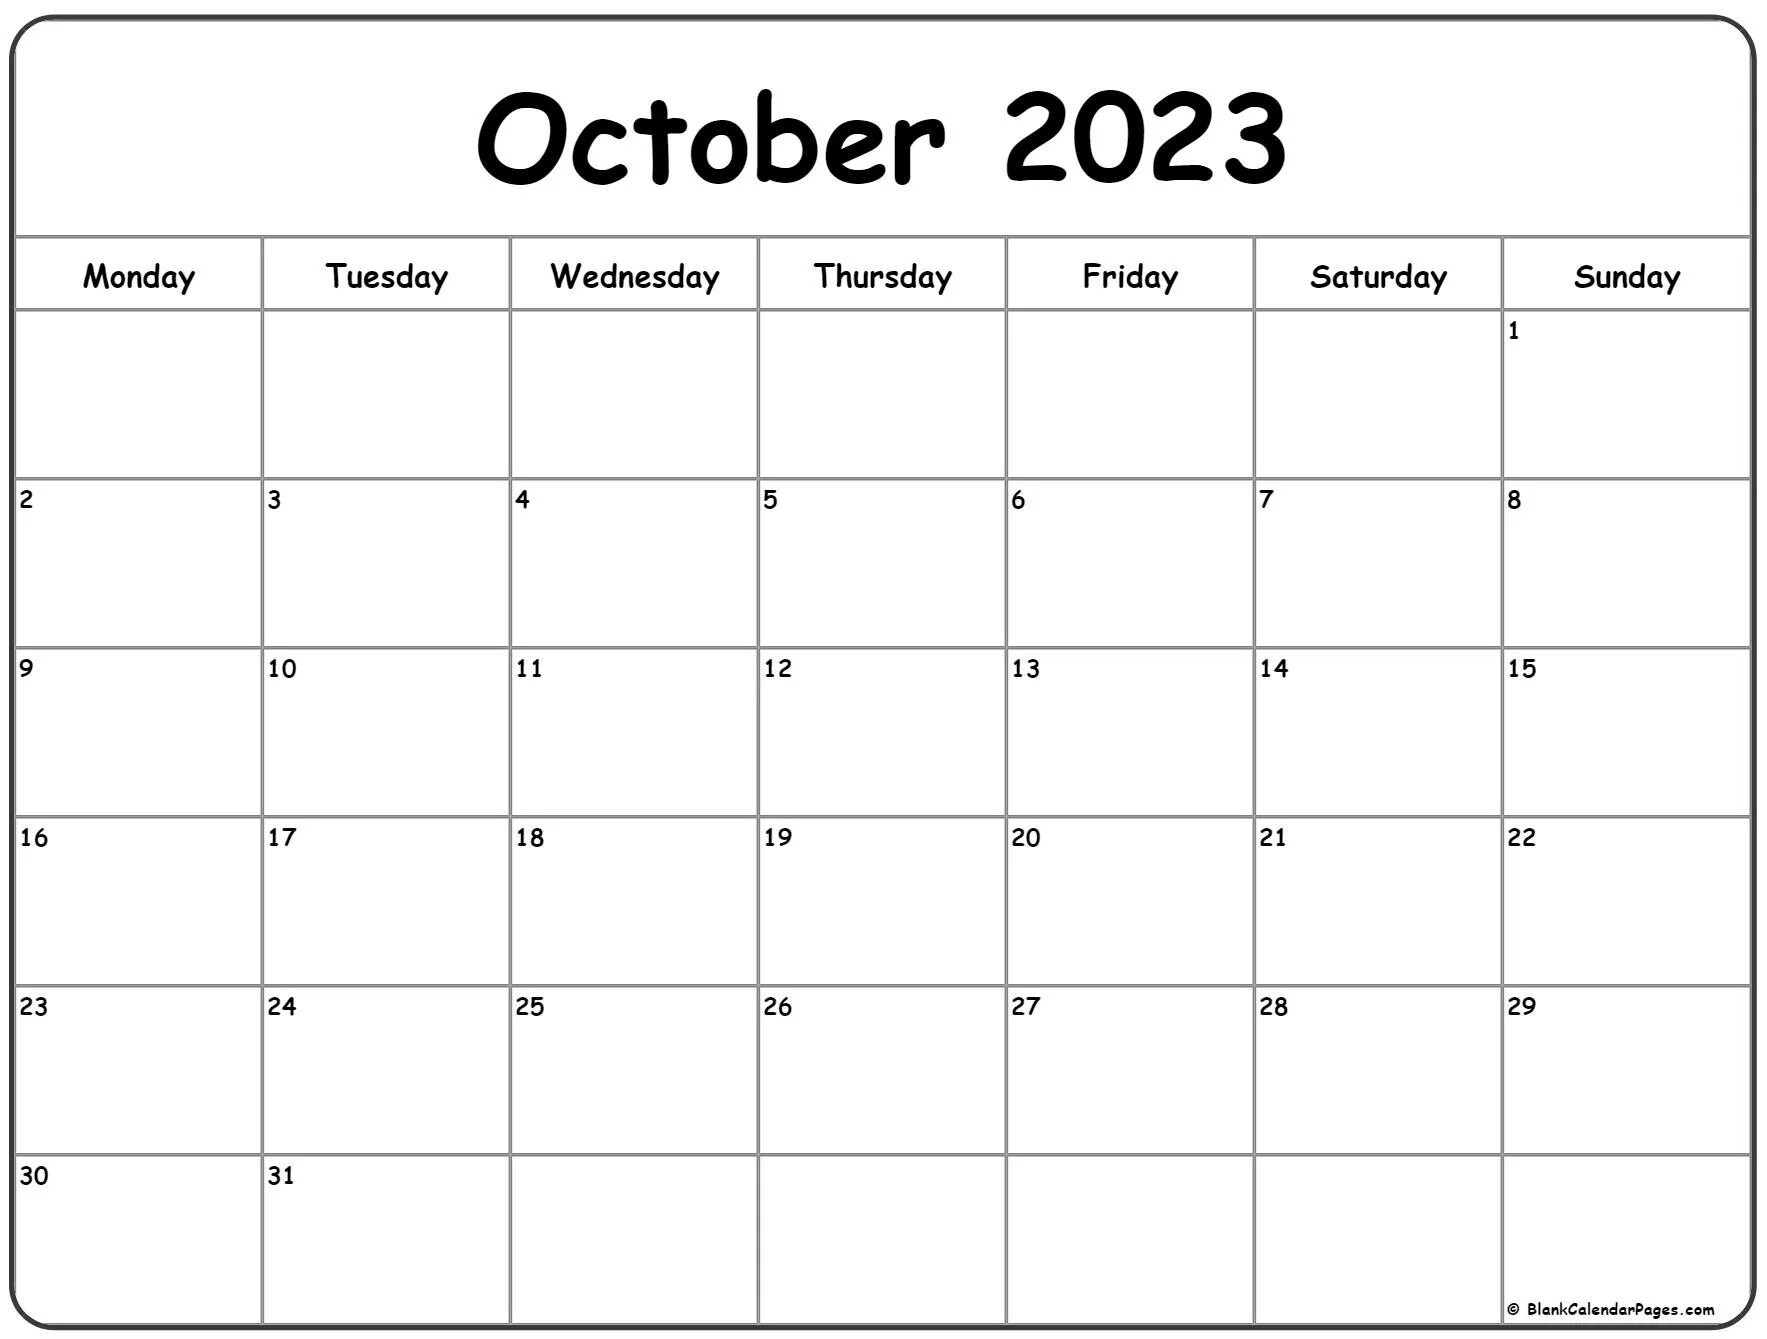 Календарь на ноябрь 2023. Календарь октябрь 2022. Октябрь 2023 календарь. Календарь планер на октябрь 2022. Календарь на октябрь месяц 2022 года.